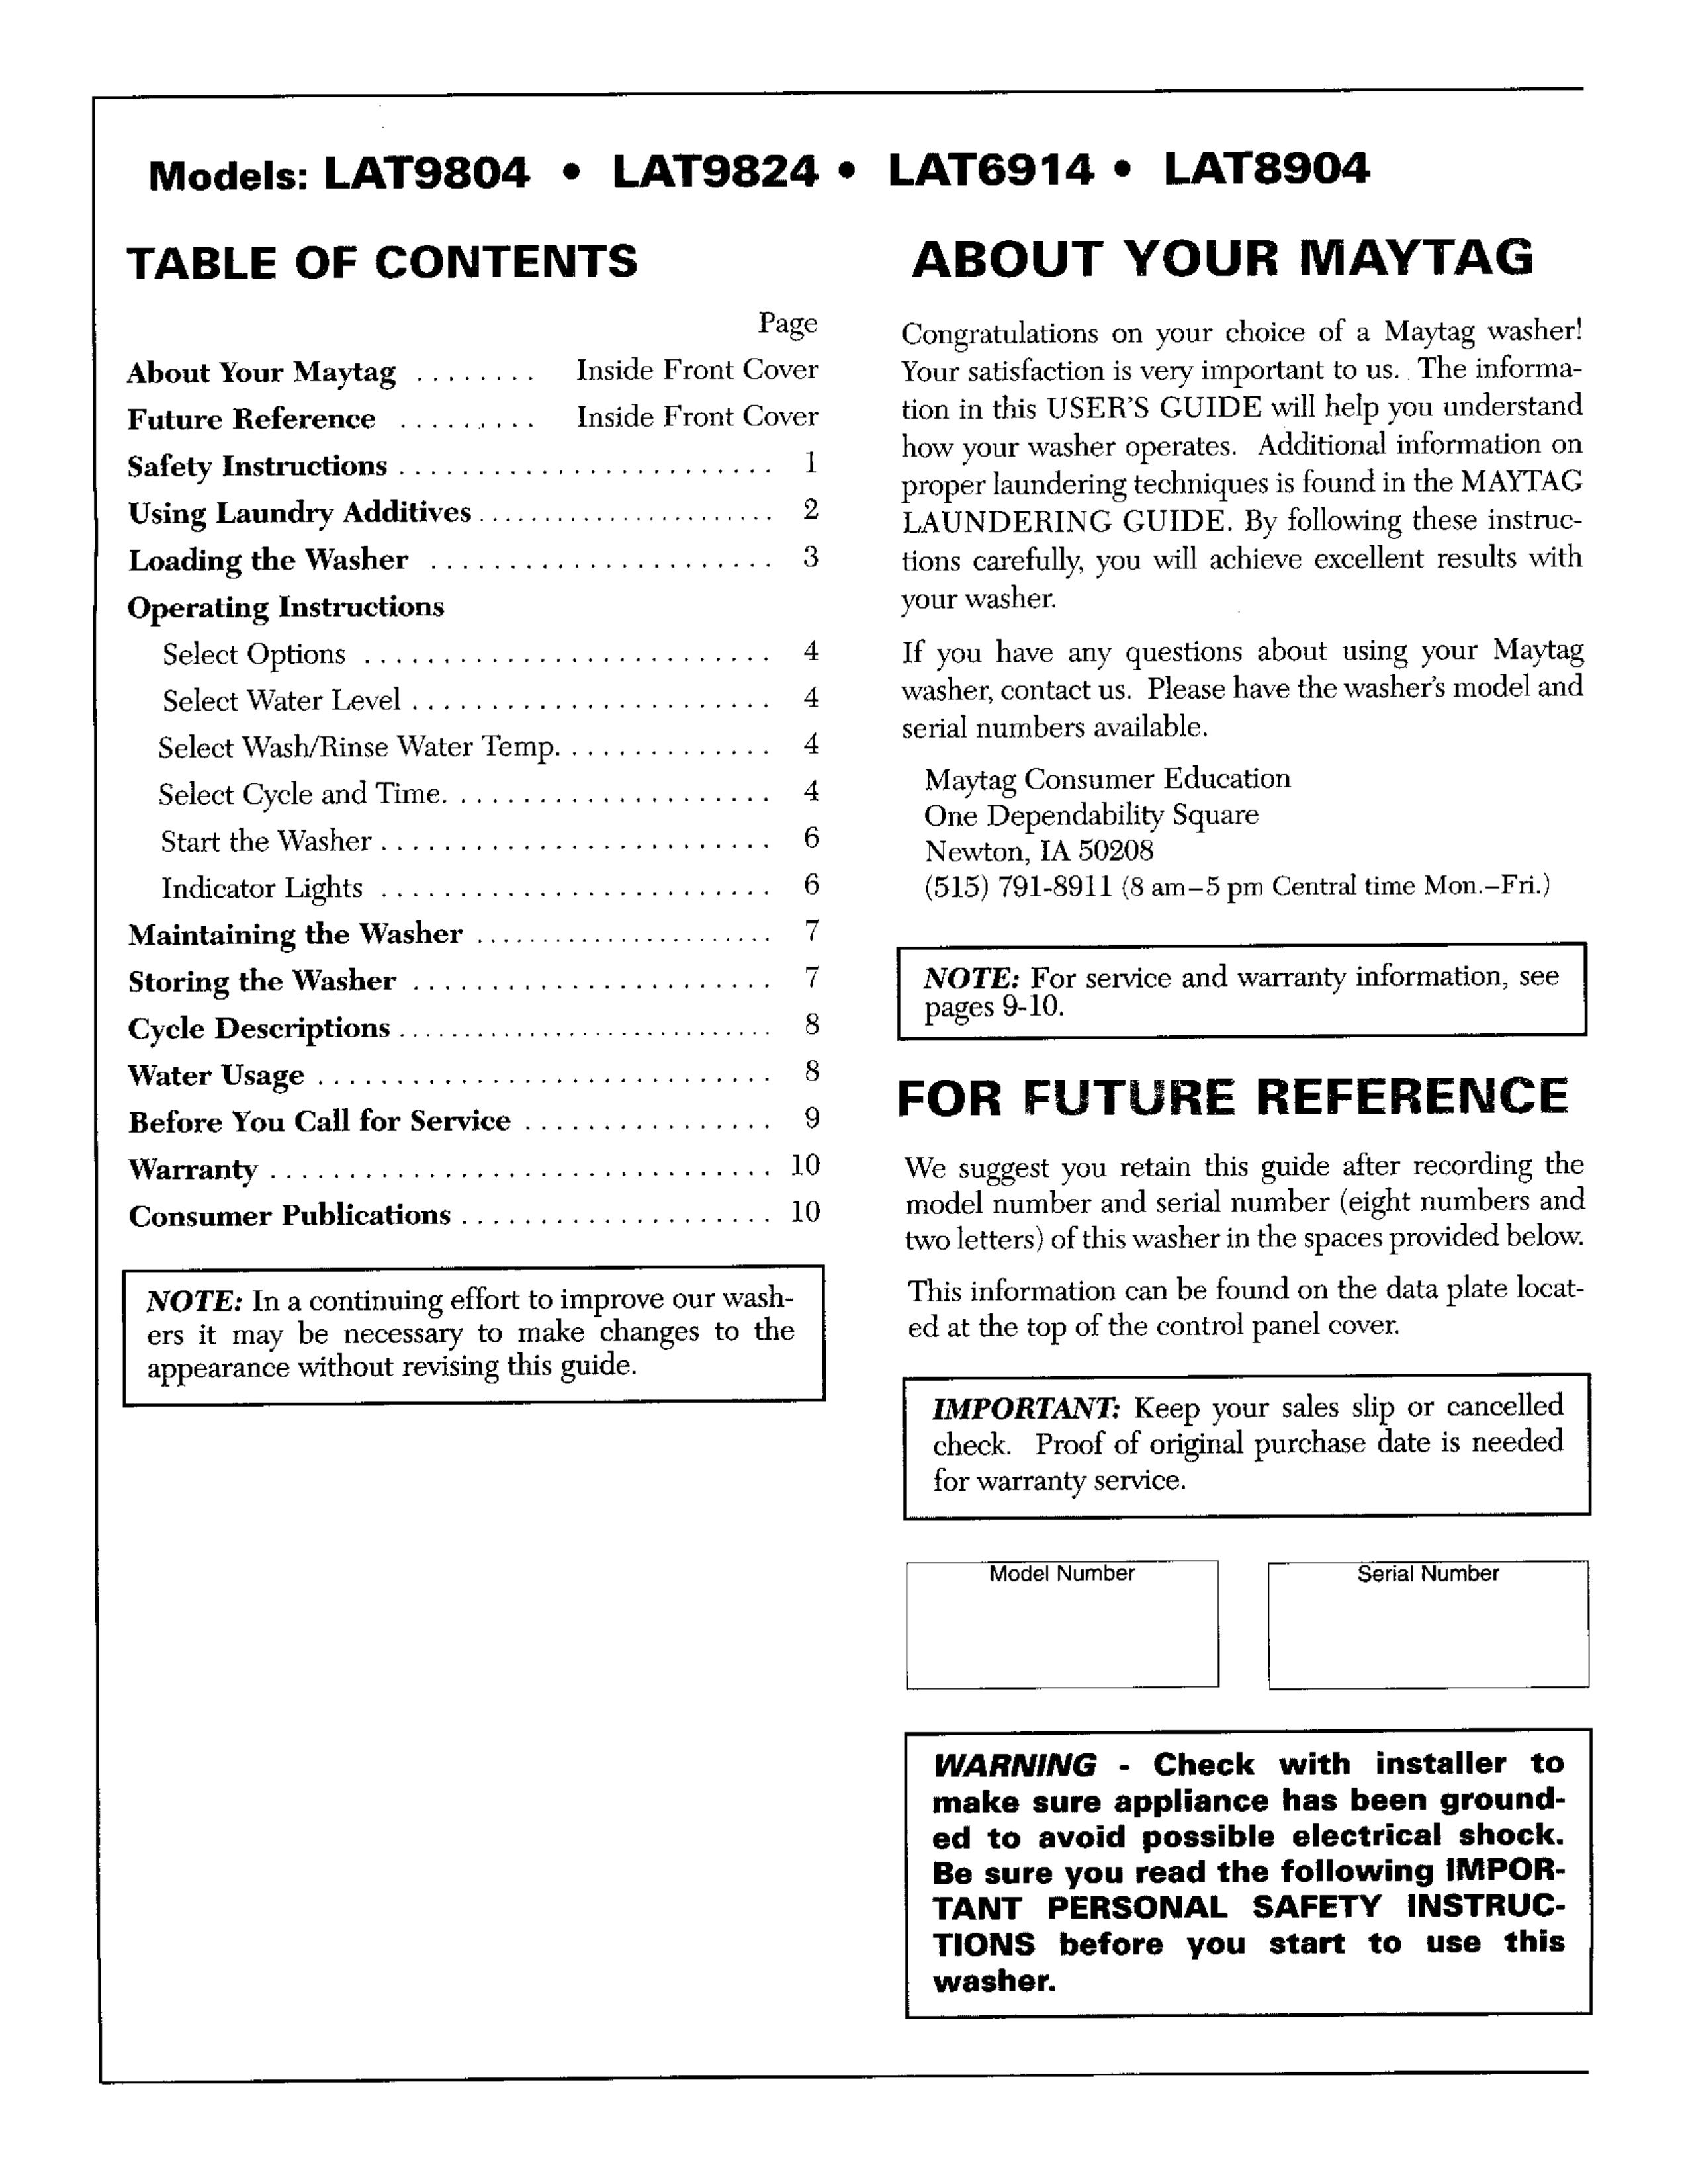 Maytag LAT9824 Washer/Dryer User Manual